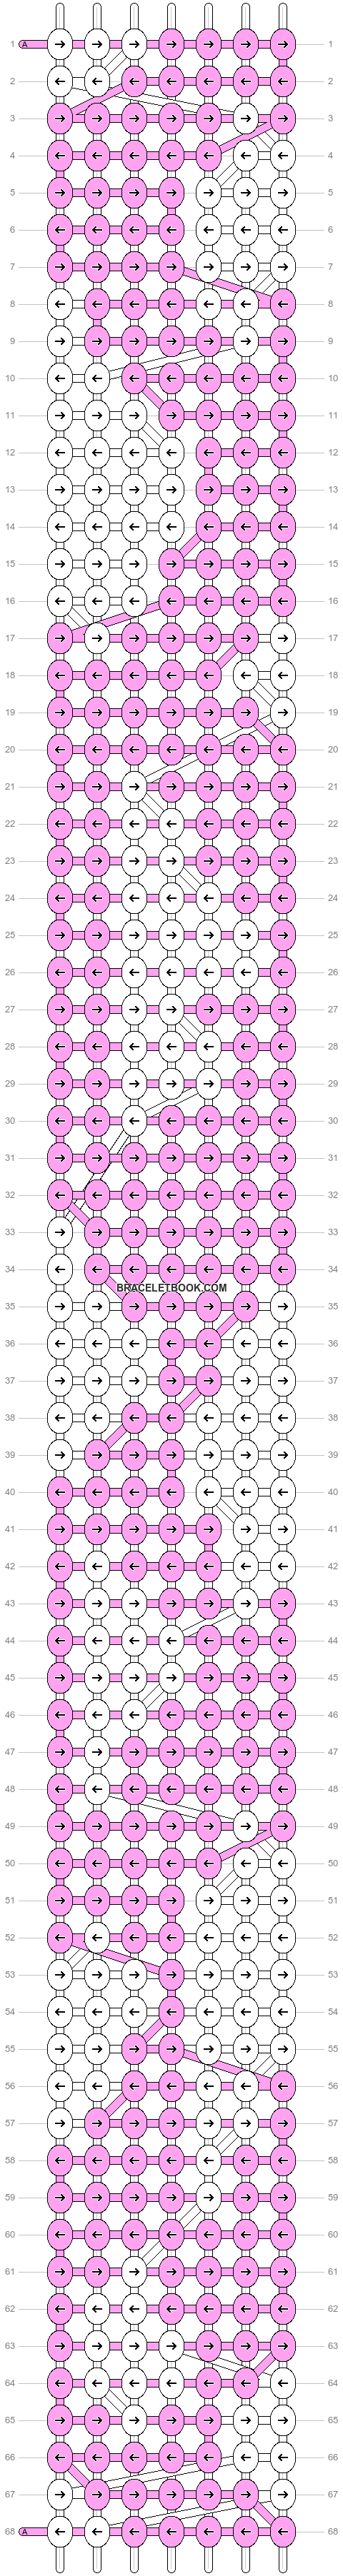 Alpha pattern #1654 variation #9252 pattern